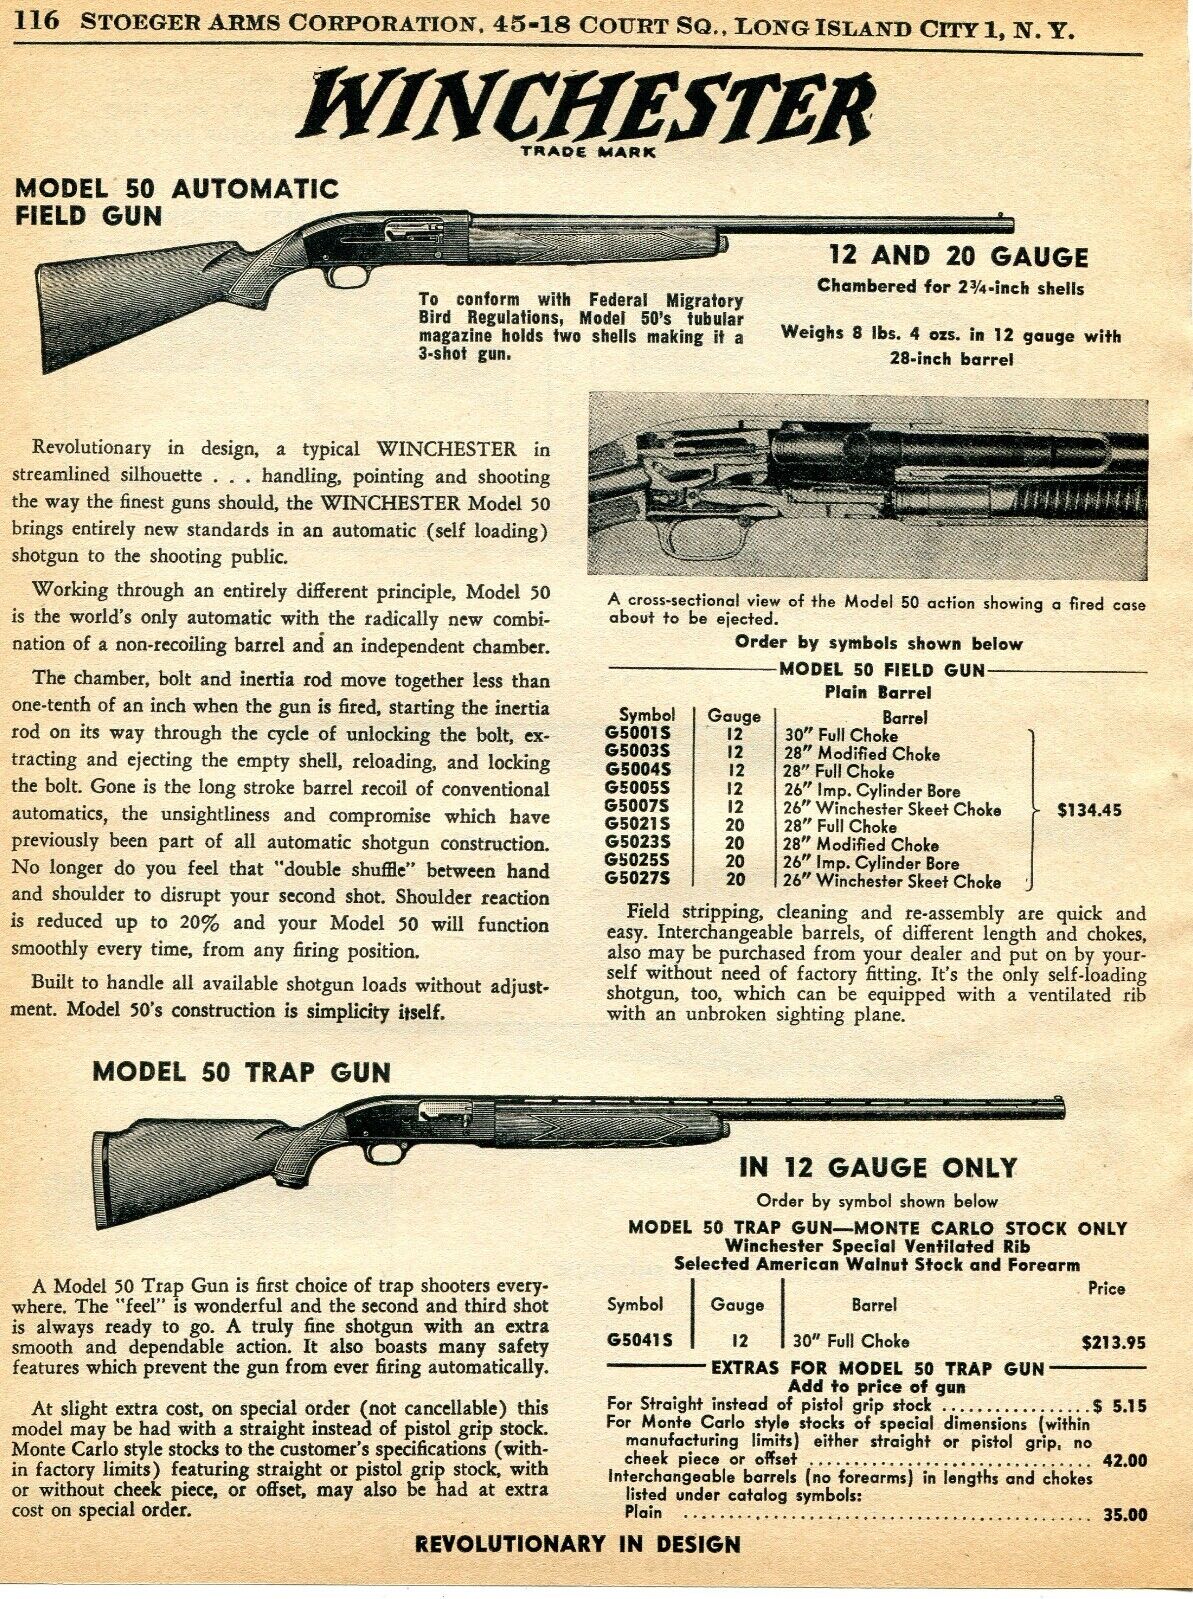 1959 Print Ad of Winchester Model 50 Trap & Field Gun Shotgun